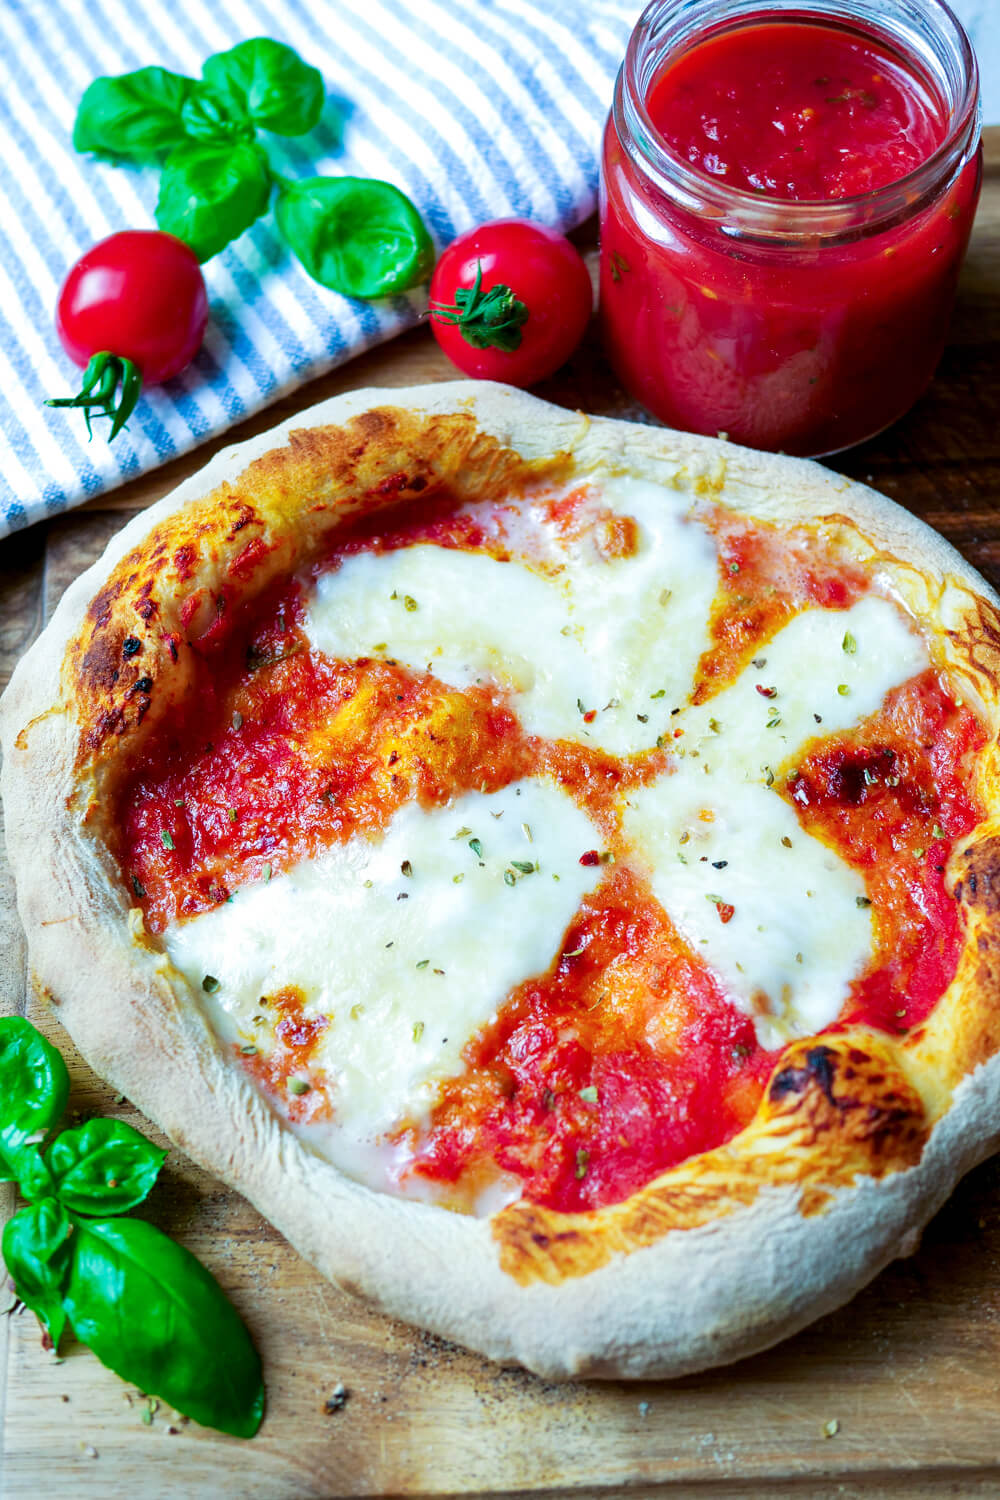 Pizza Margherita mit Tomatensauce und Mozzarella